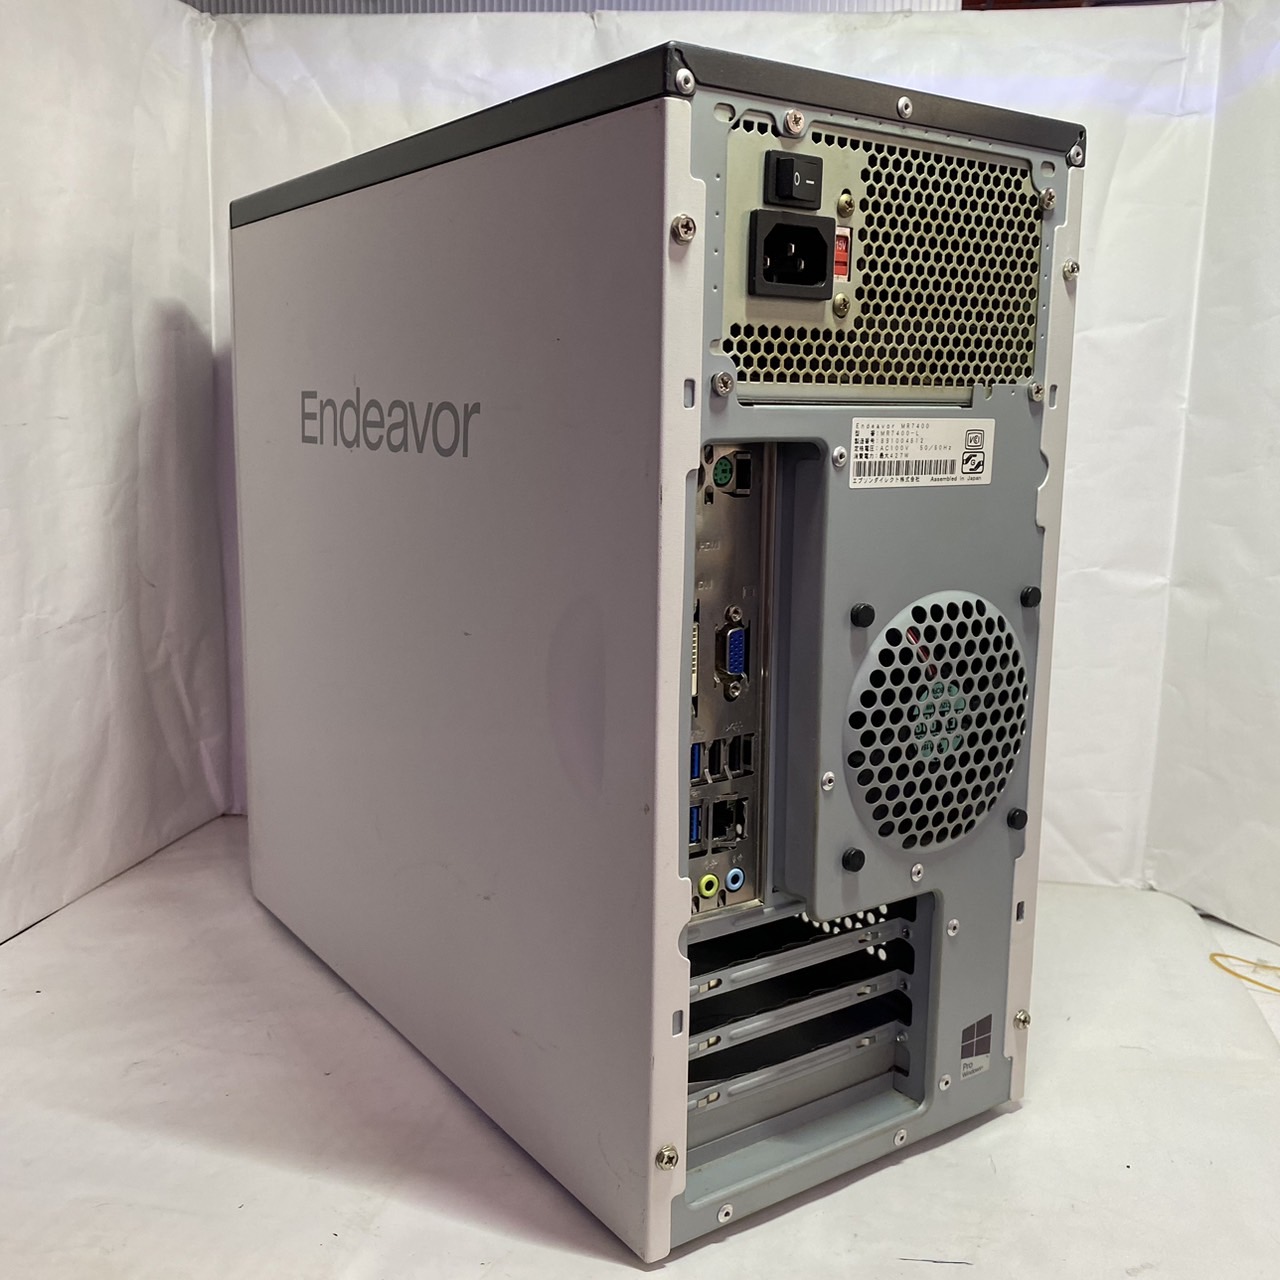 EPSON(エプソン) Endeavor MR7400の激安通販 - パソコンショップパウ